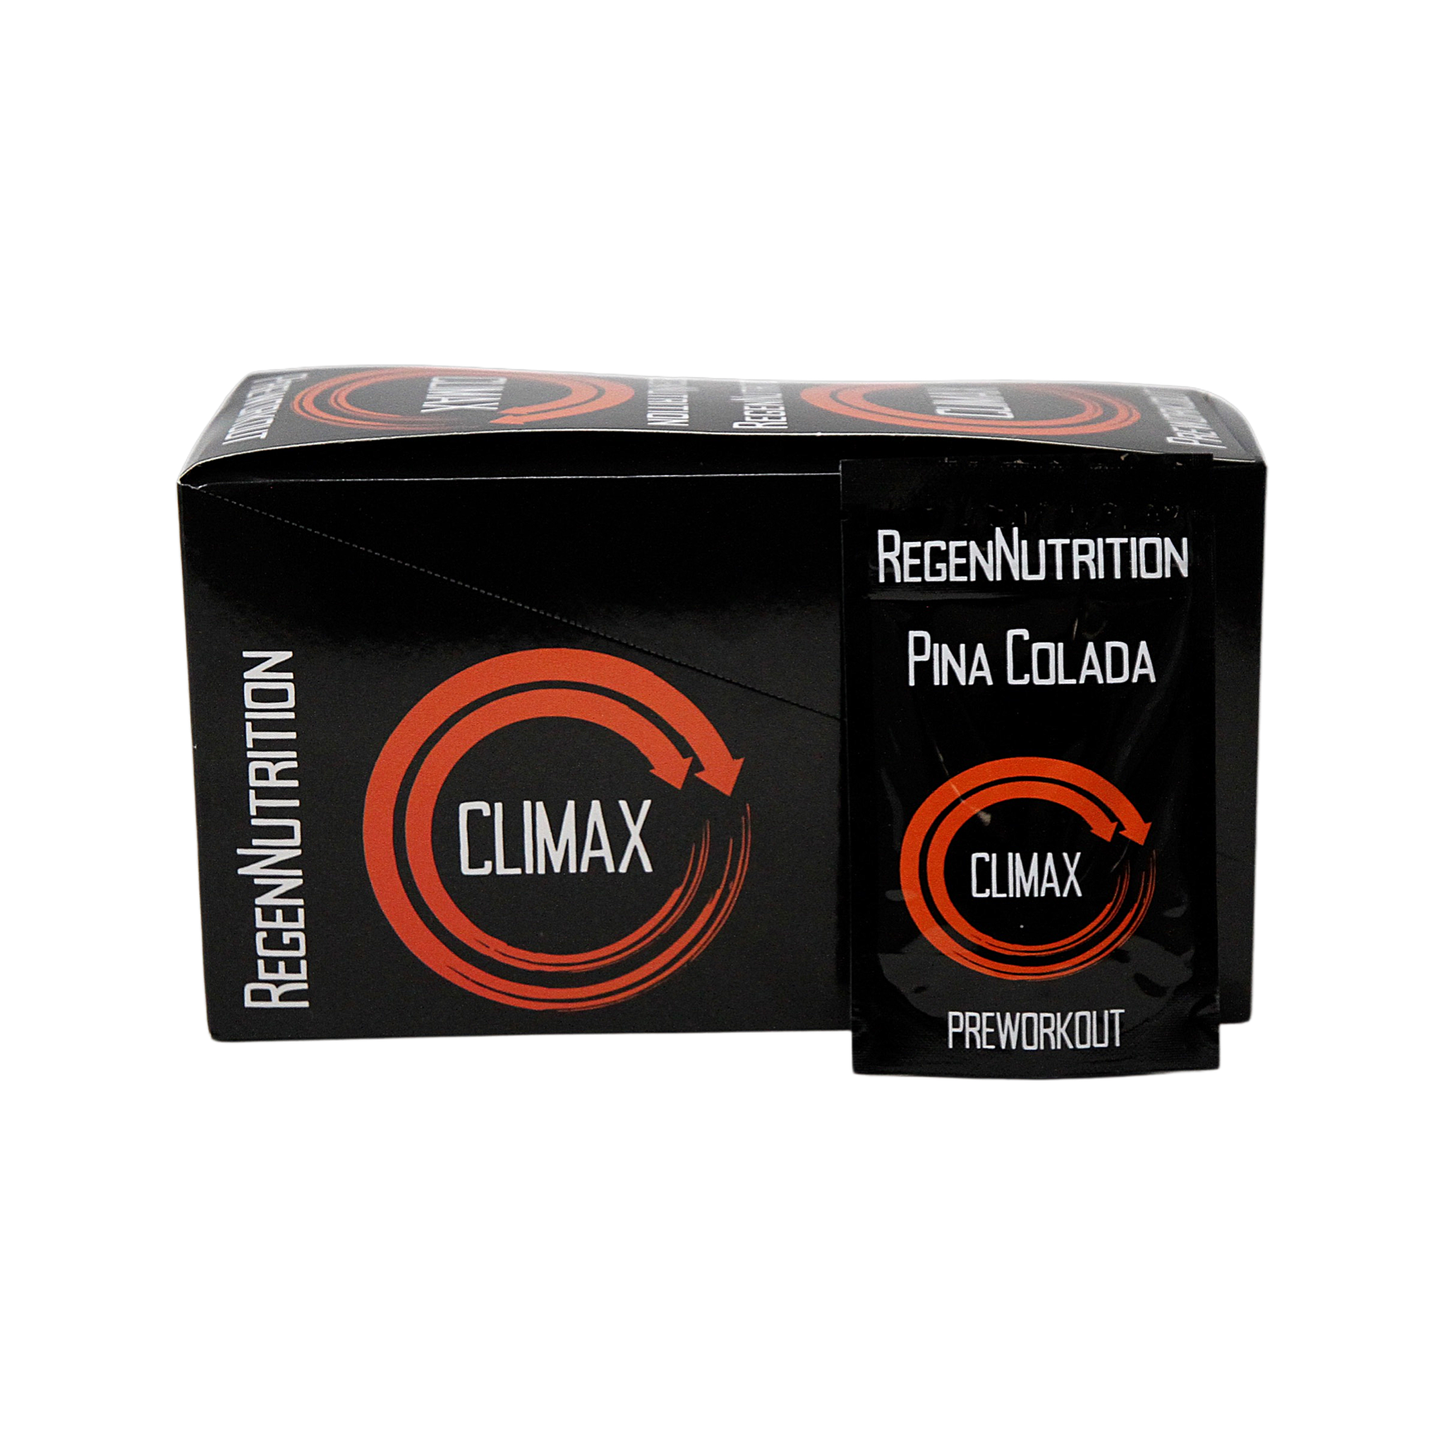 Pina Colada CLIMAX Preworkout Packets